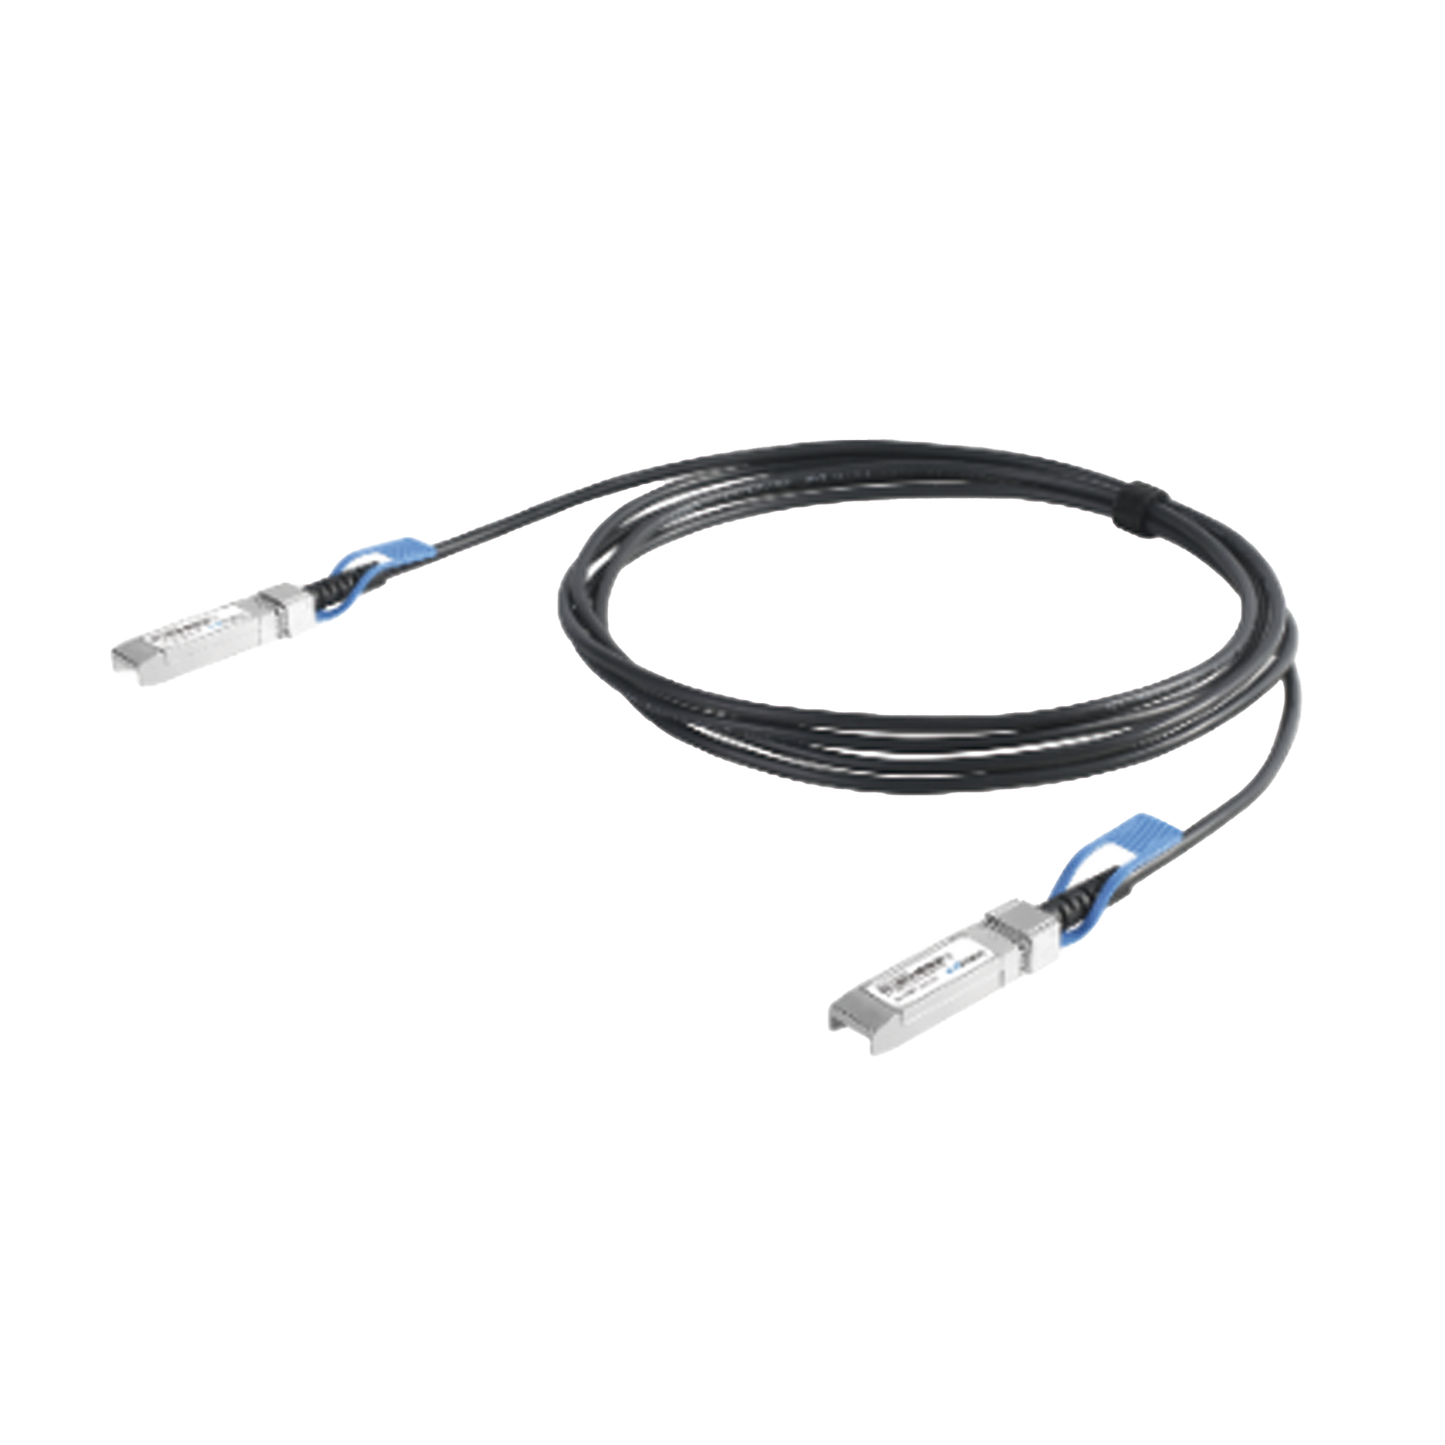 Cable DAC SFP28 de 25 Gbps a 25 Gbps (Longitud: 2 metros)